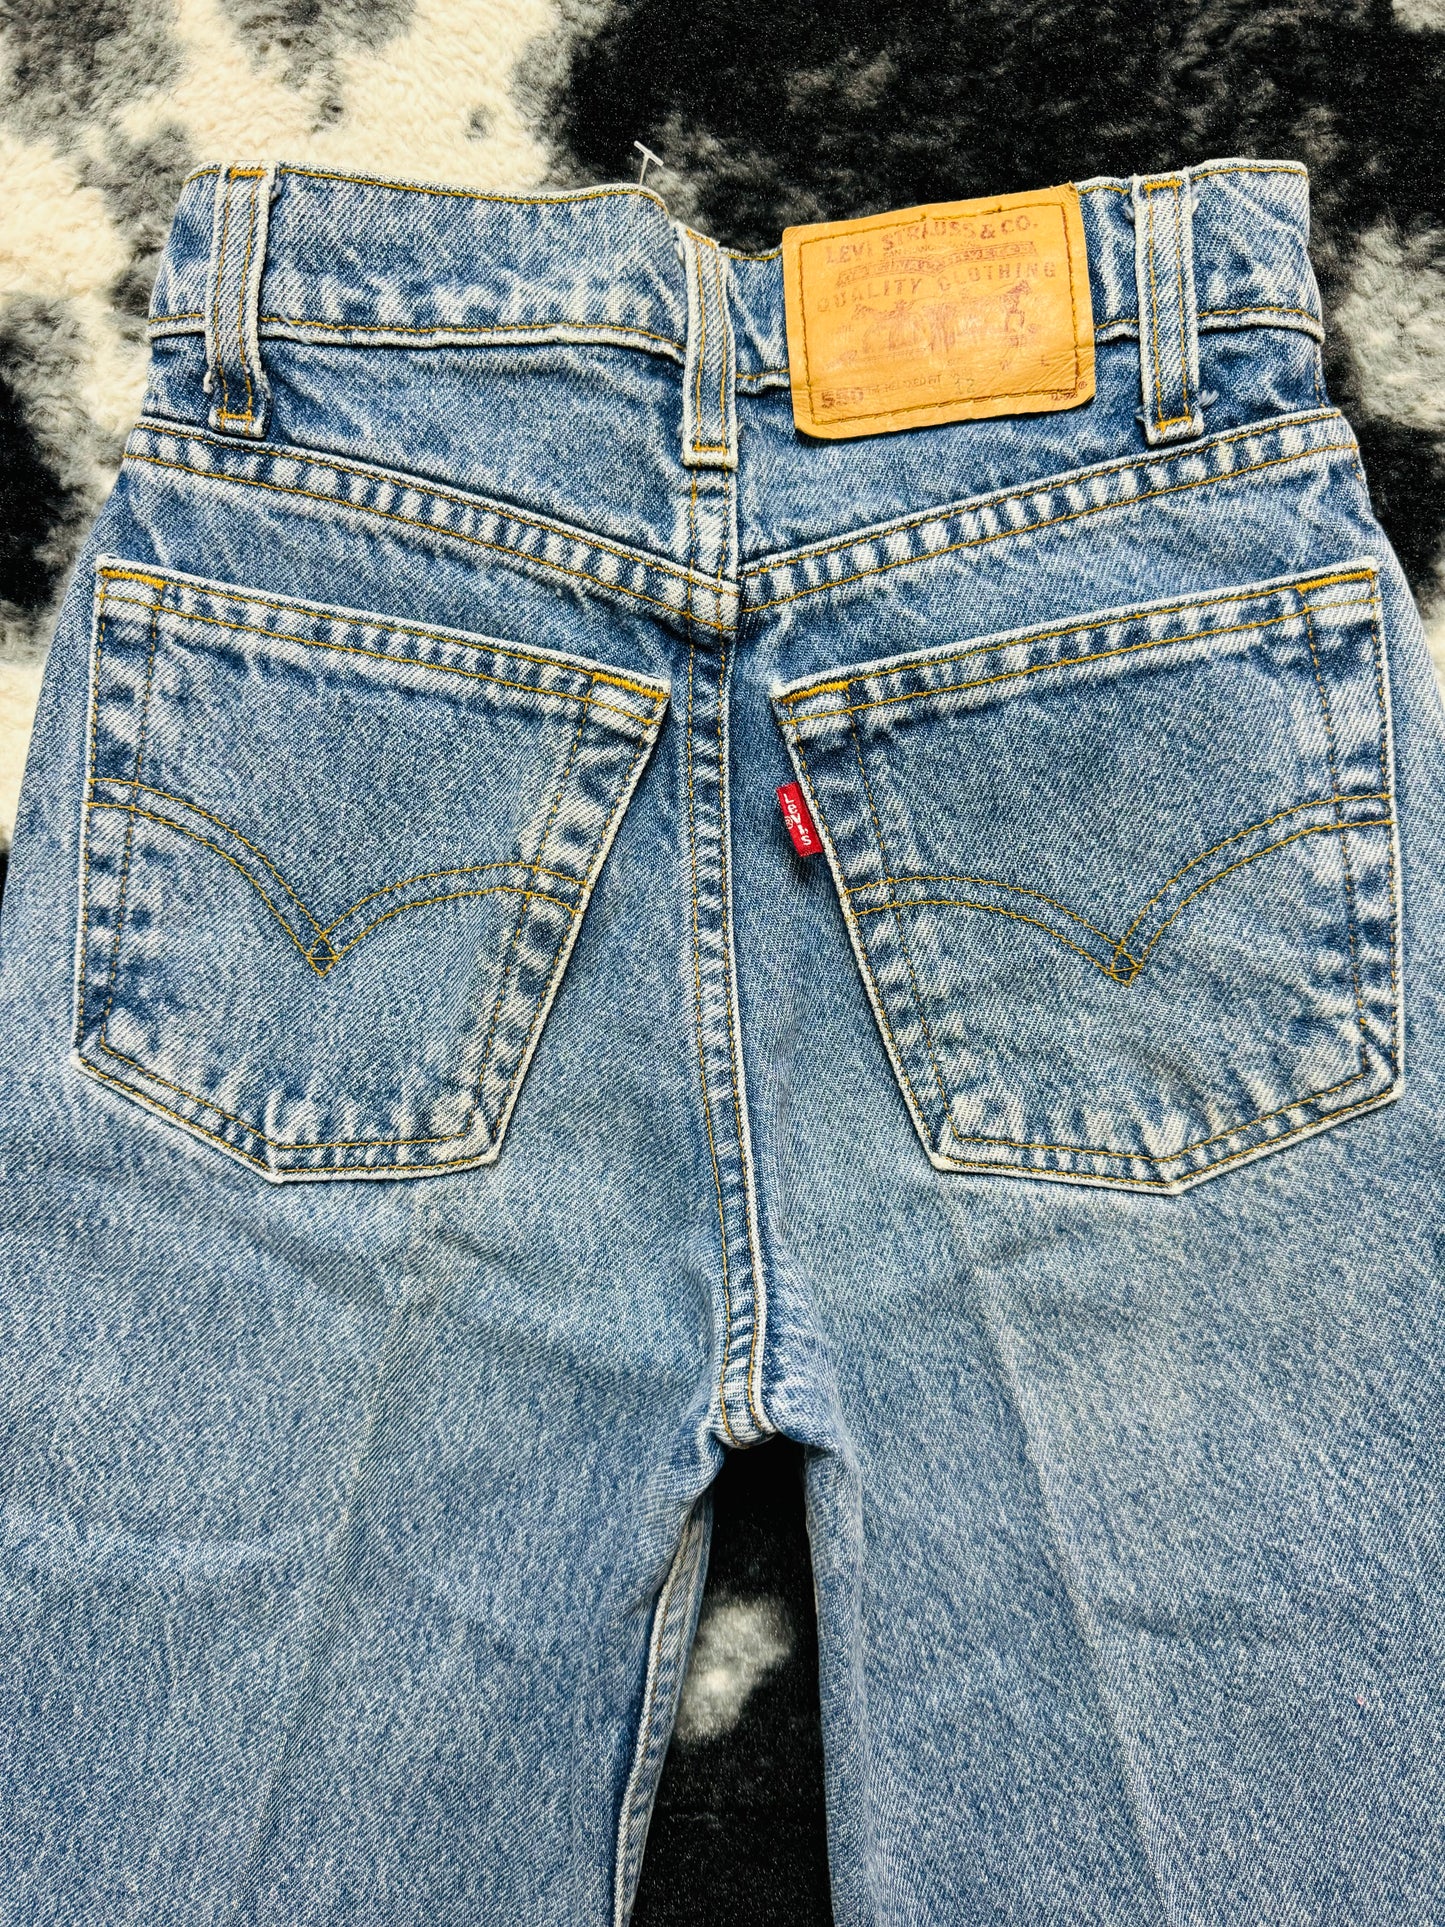 Wrangler Light Washed Jeans (31x32)